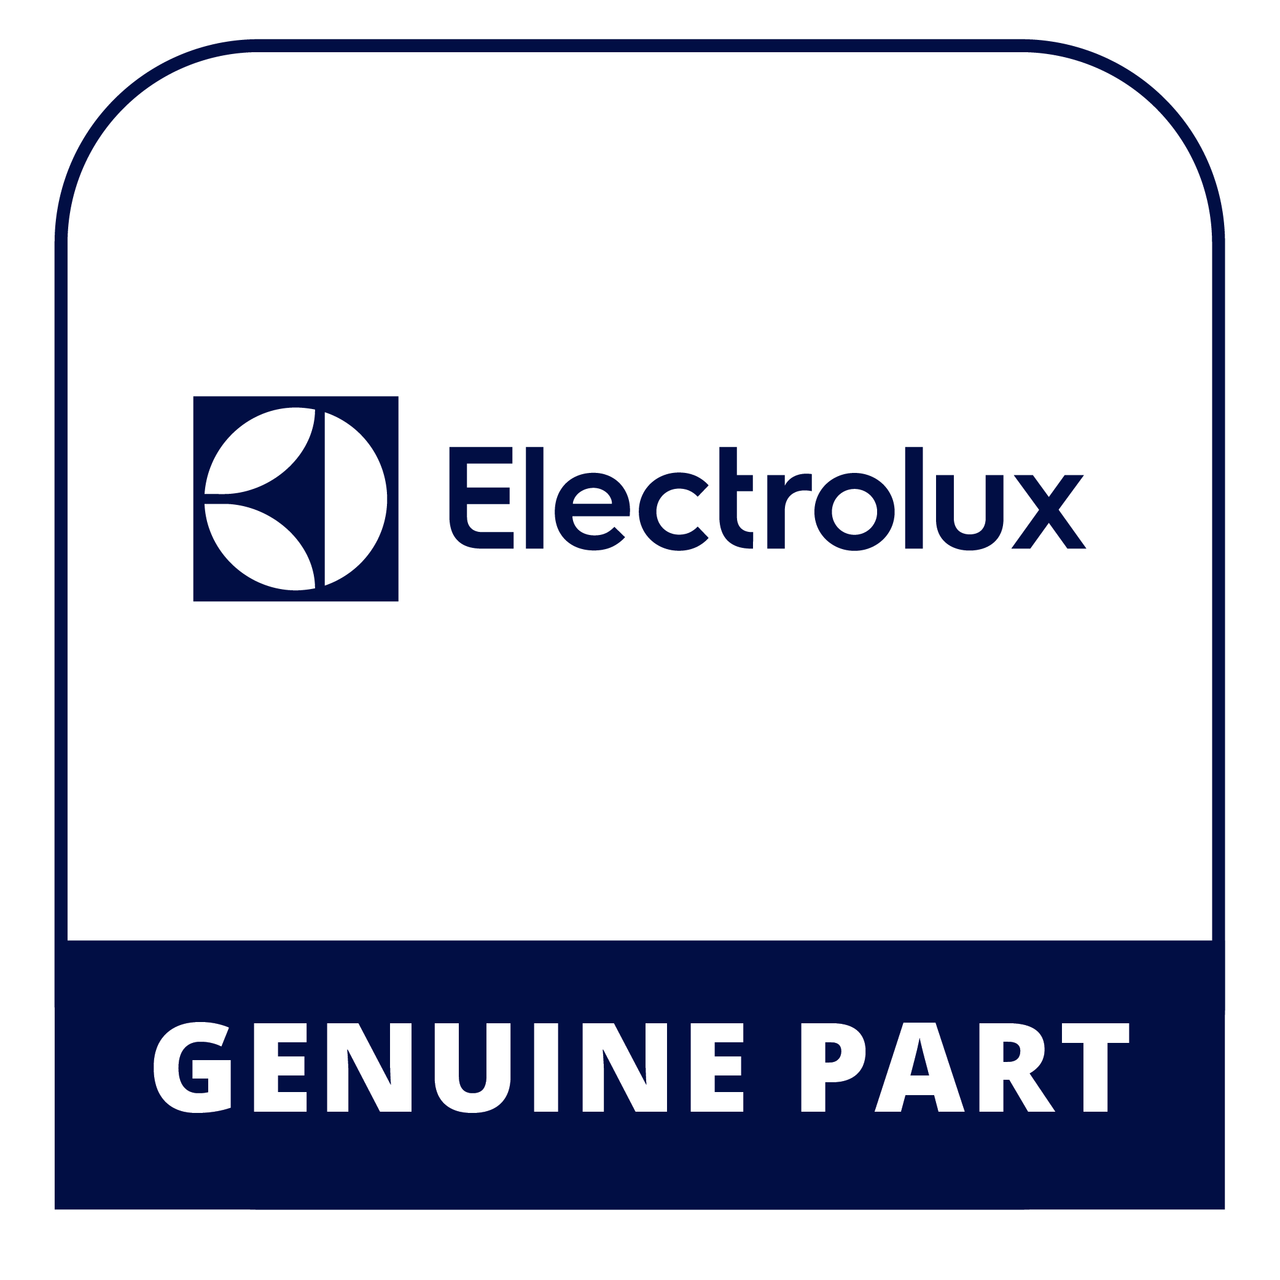 Frigidaire - Electrolux 316419304 - Overlay - Genuine Electrolux Part